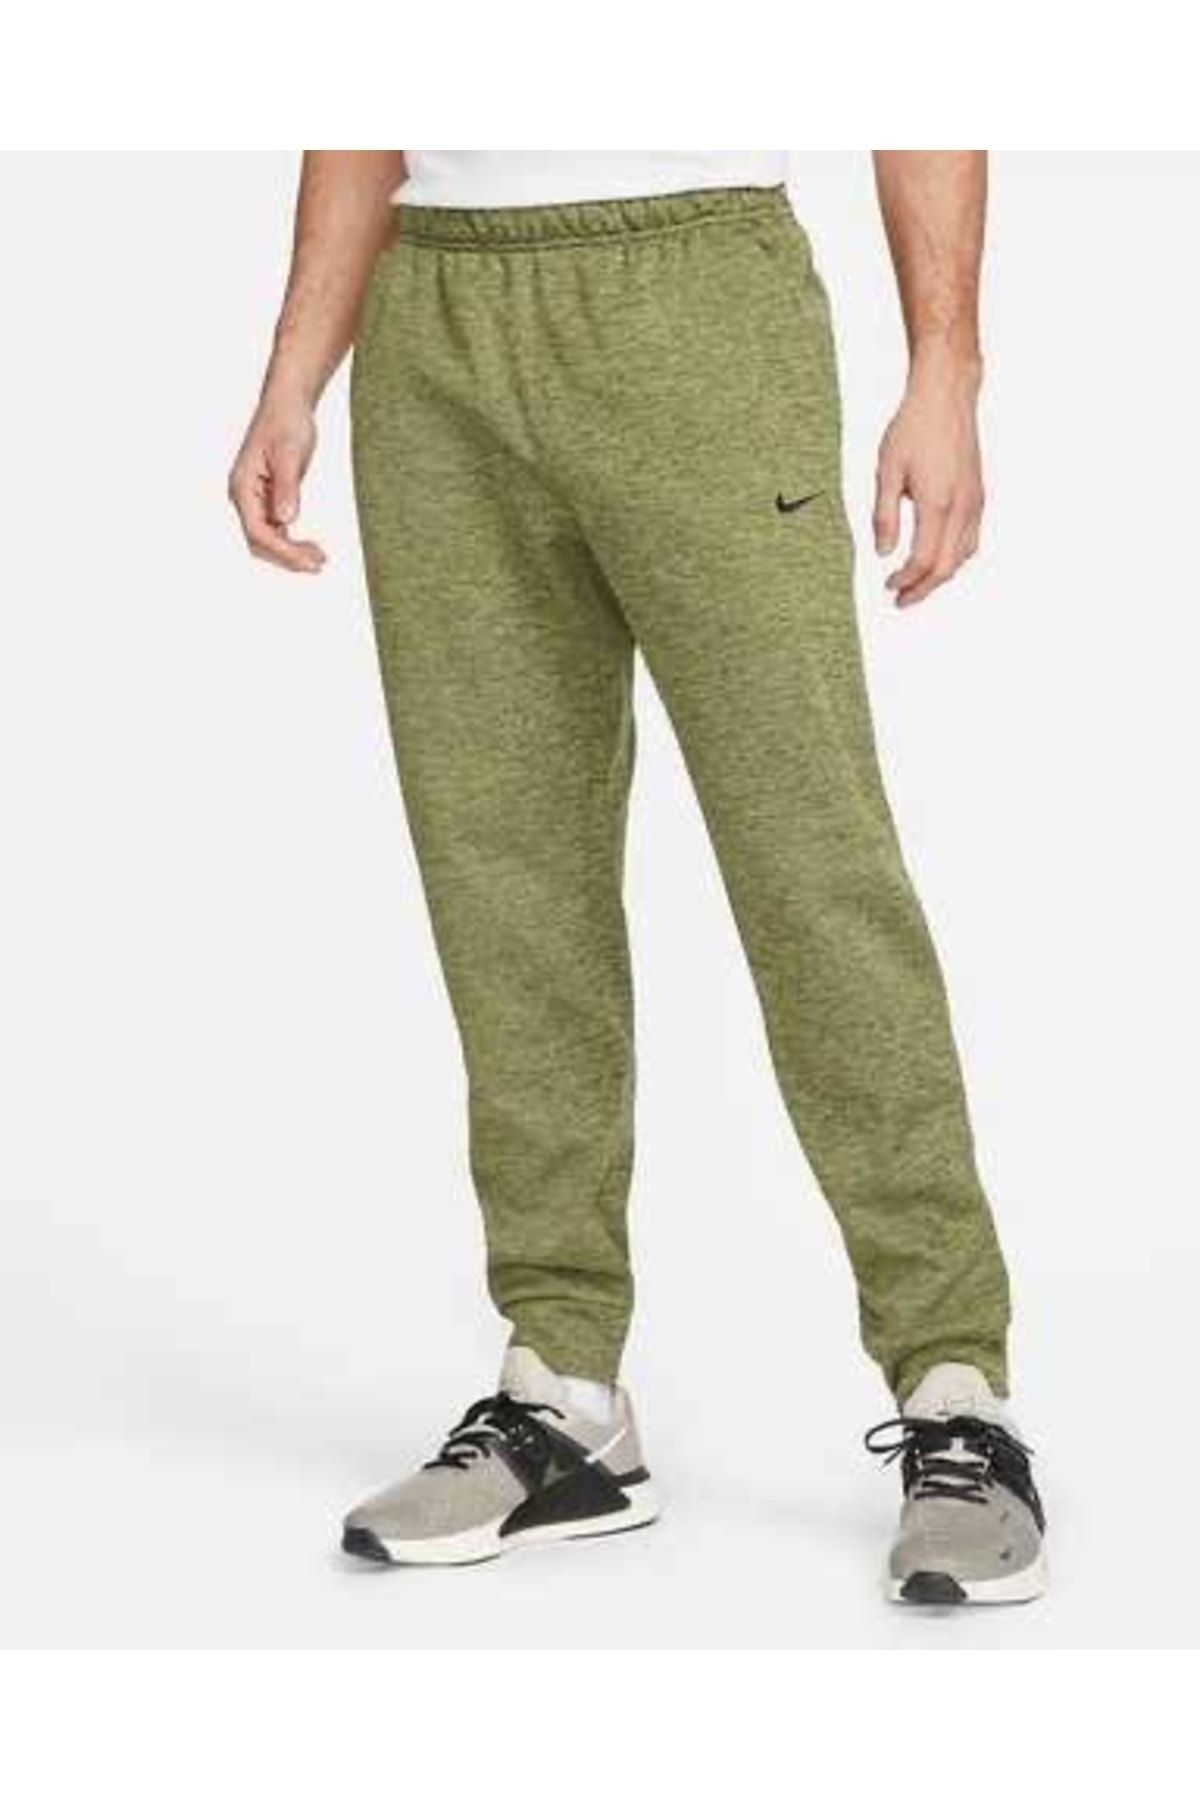 Nike Men's Therma Dri-Fit Training Pants, Charcoal Heather/Black, Large/37